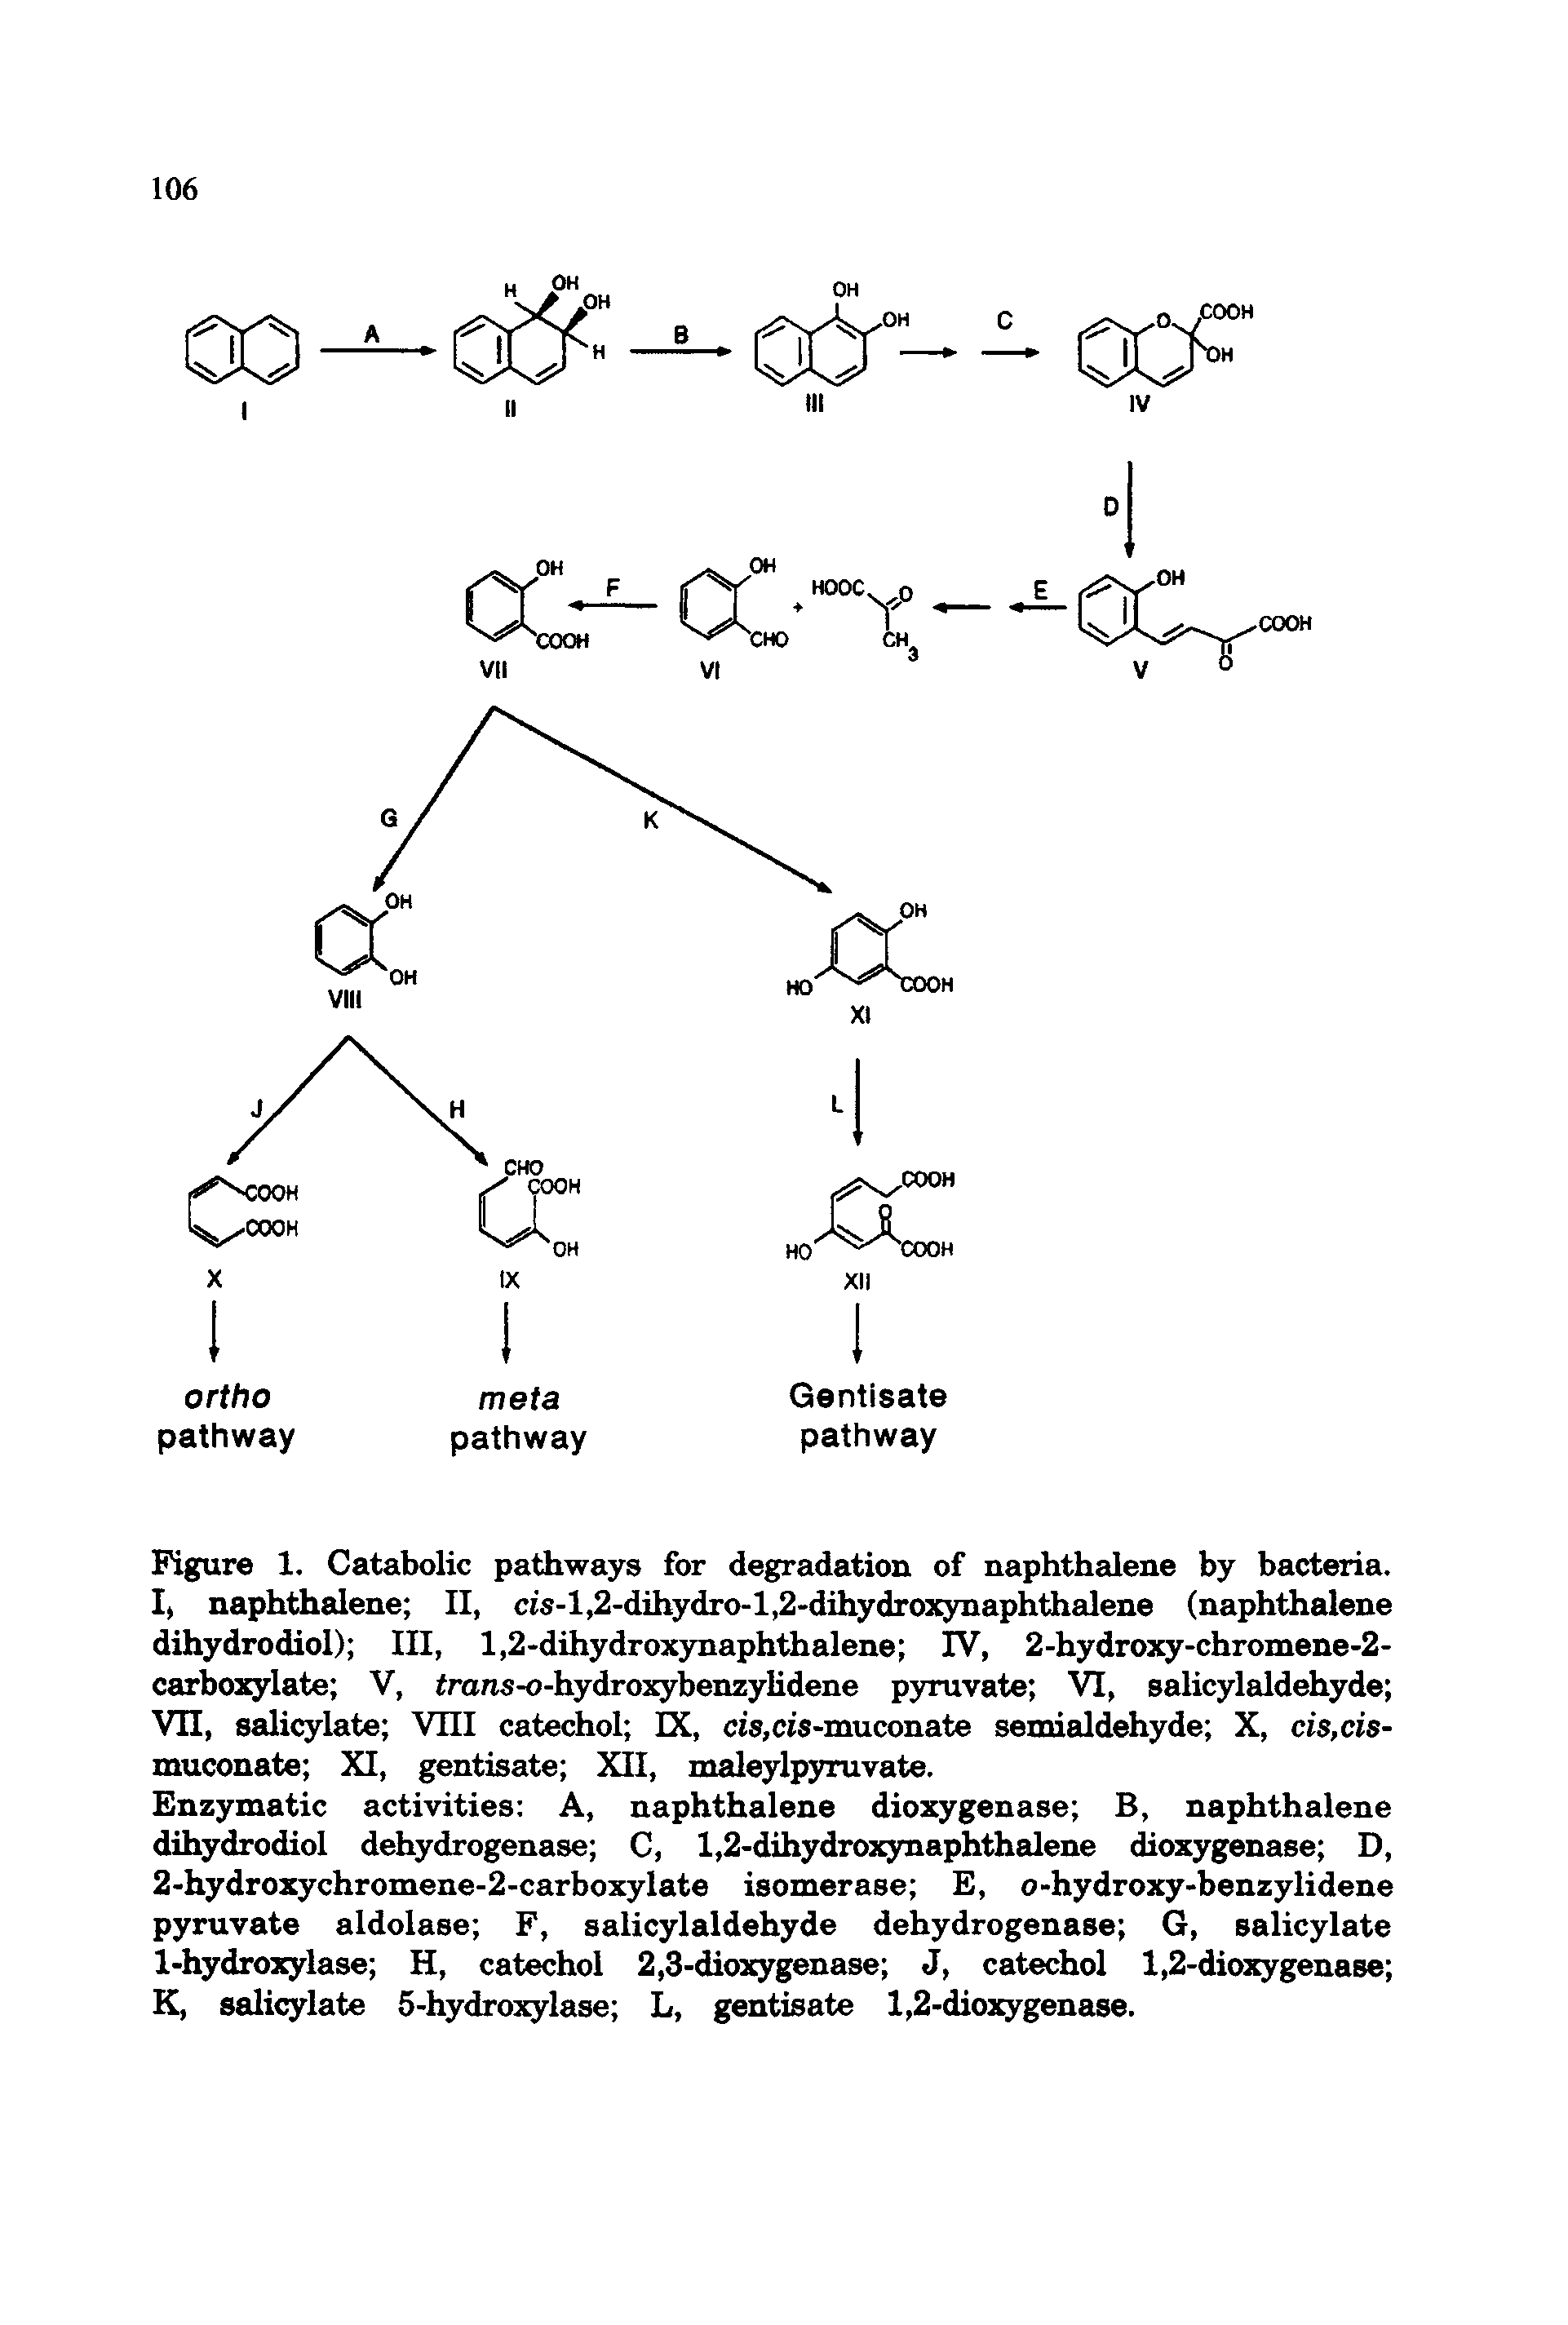 Figure 1. Catabolic pathways for degradation of naphthalene by bacteria. I, naphthalene II, cis-l,2-dihydro-l,2-dihydroxynaphthalene (naphthalene dihydrodiol) III, l,2-dihydrox3maphthalene IV, 2-hydroxy-chromene-2-carboxylate V, mns-o-hydroxybenzyIidene pyruvate VI, salicylaldehyde Vn, salicylate VIII catechol IX, c 5,ci8-muconate semialdehyde X, cis,ci8-muconate XI, gentisate XII, maleylpyruvate.